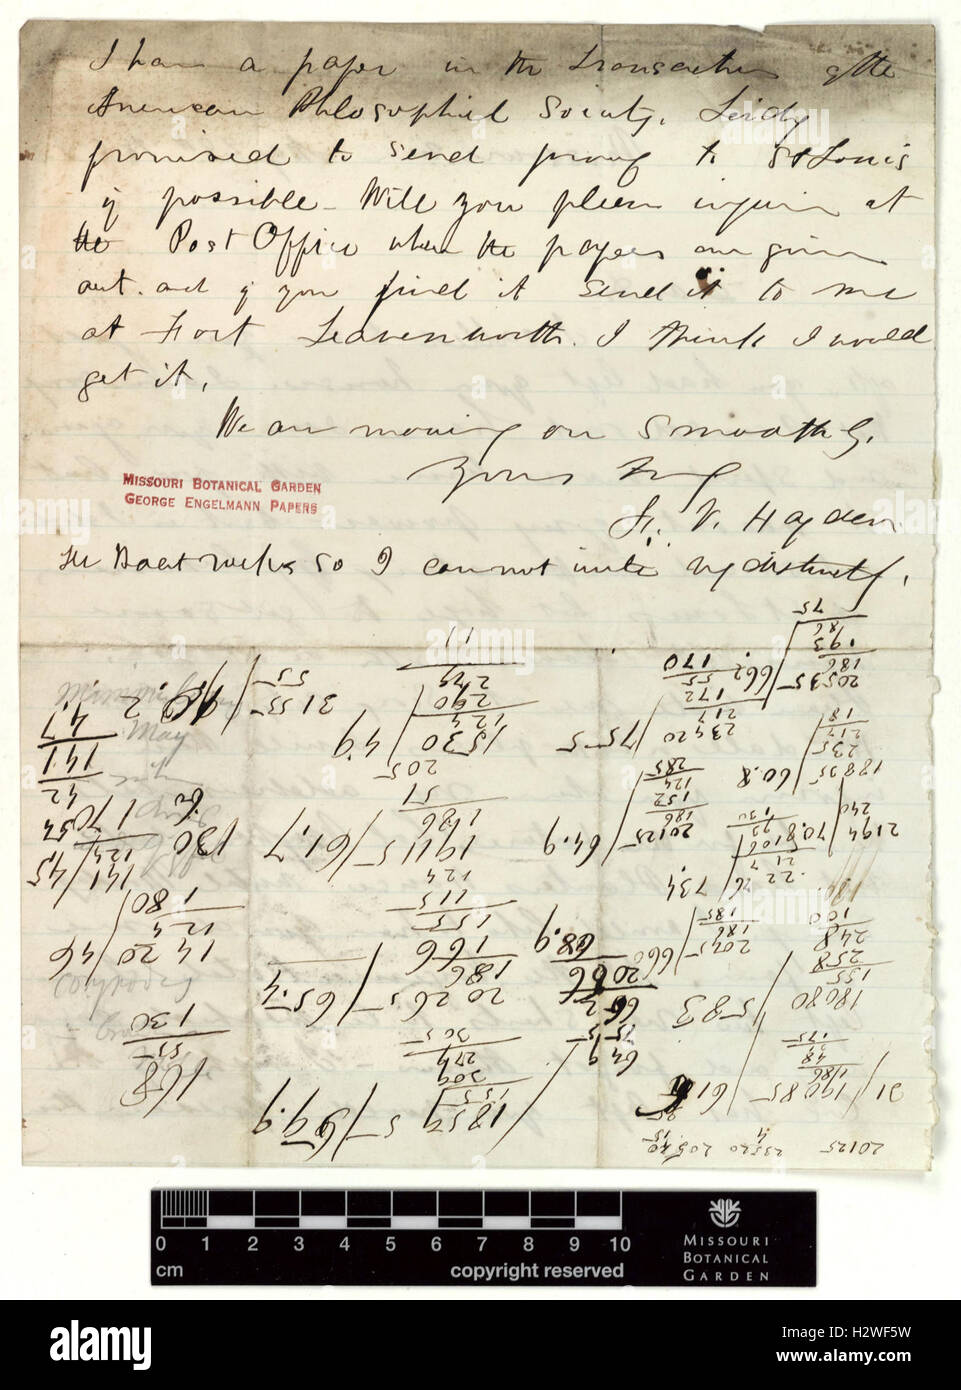 Correspondence - Hayden (Ferdinand) and Engelmann (George) (May 29, 1859 (1) verso) BHL435 Stock Photo